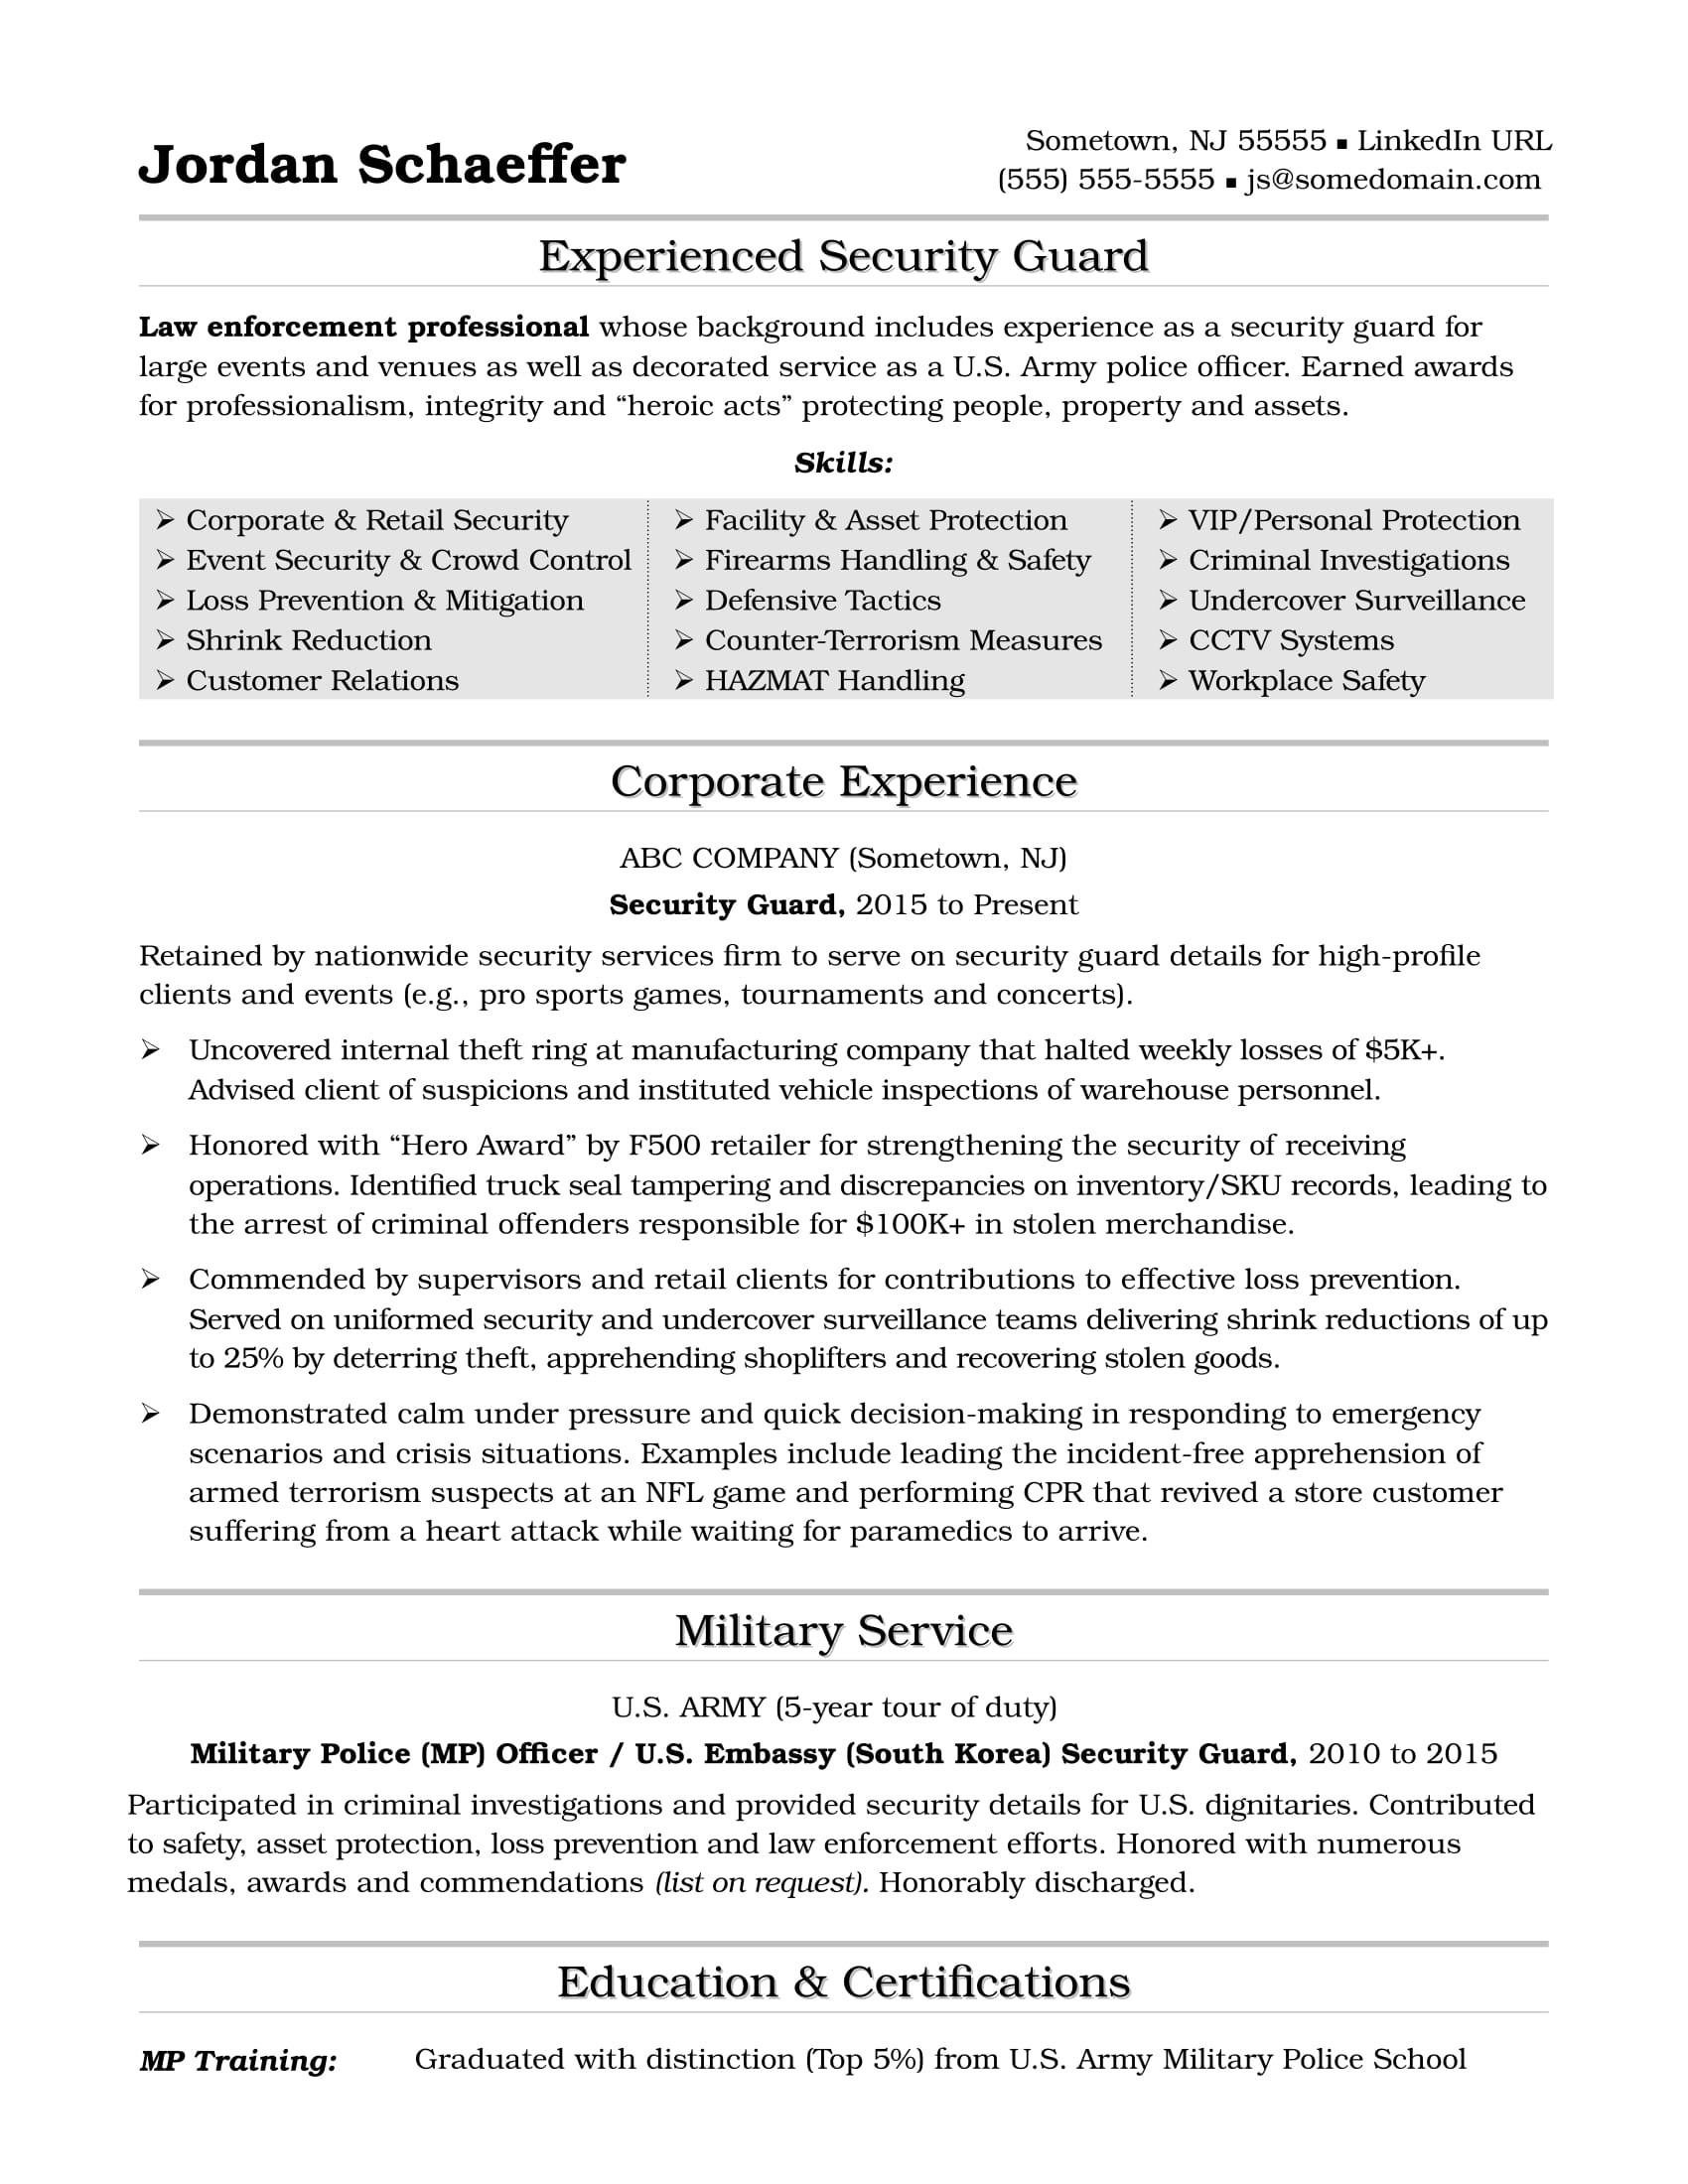 Security Officer Job Description Sample Resume Security Guard Resume Monster.com